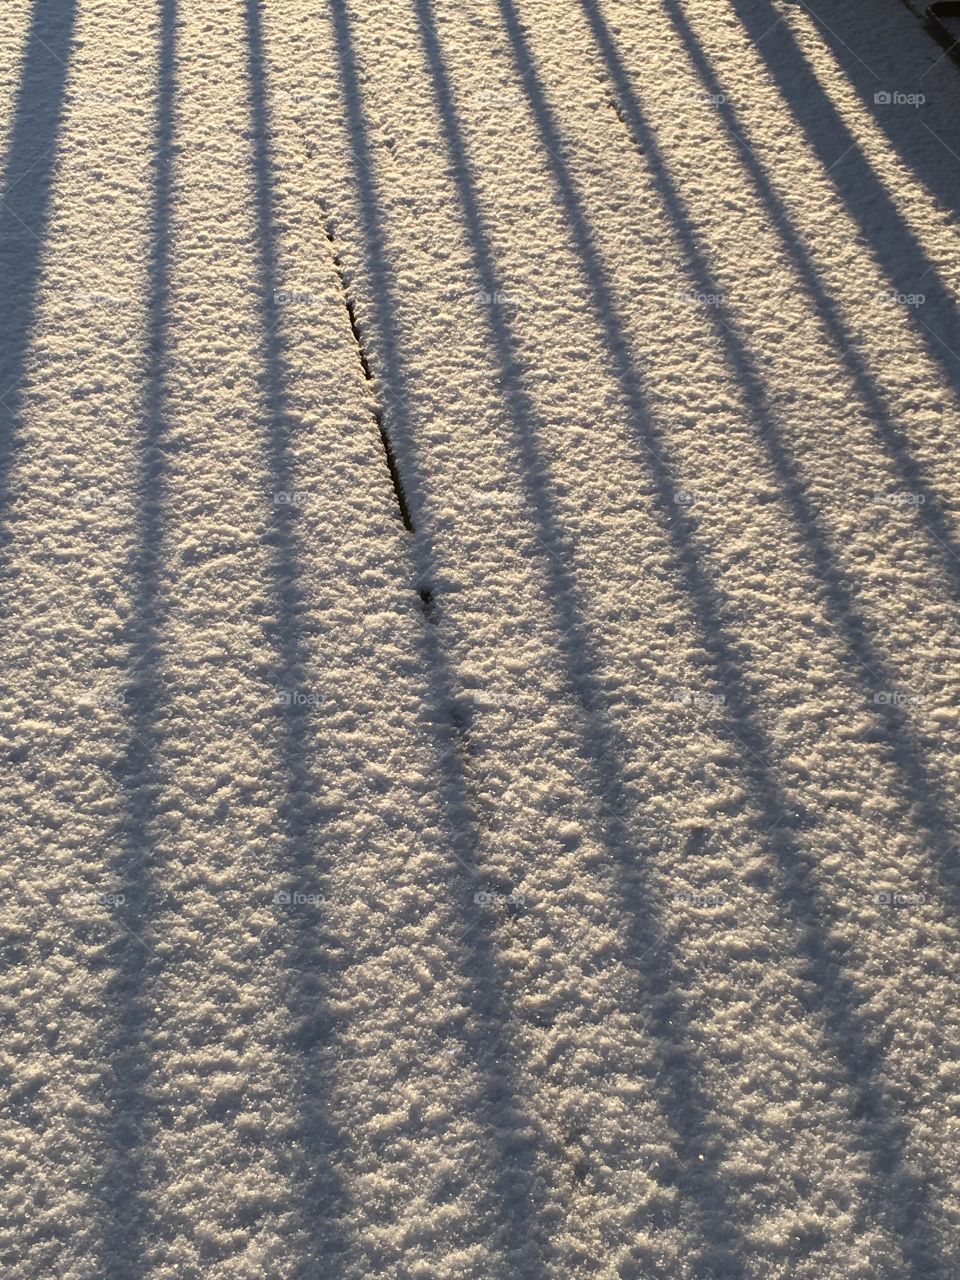 Shadows in Snow